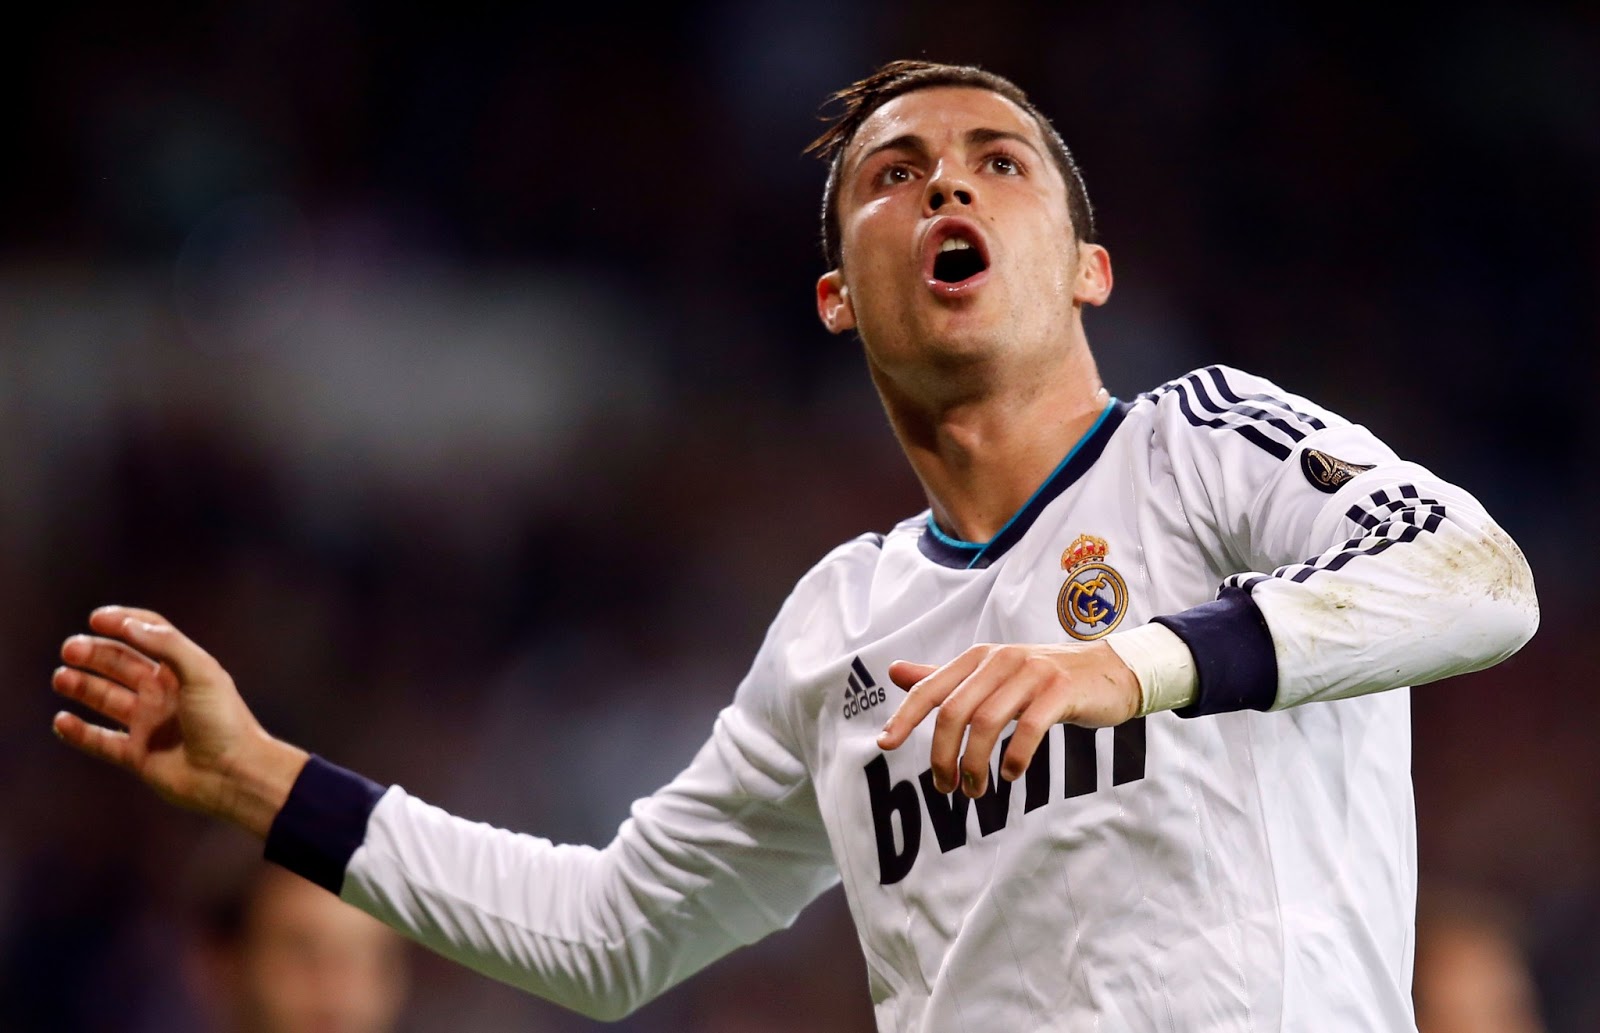 http://2.bp.blogspot.com/-IUu56xFFLZU/UPneSLsmg4I/AAAAAAAAPHU/RkmXmgtbBTo/s1600/Cristiano-Ronaldo-2013-HD-Wallpaper-Picture-Real-Madrid-2.jpg